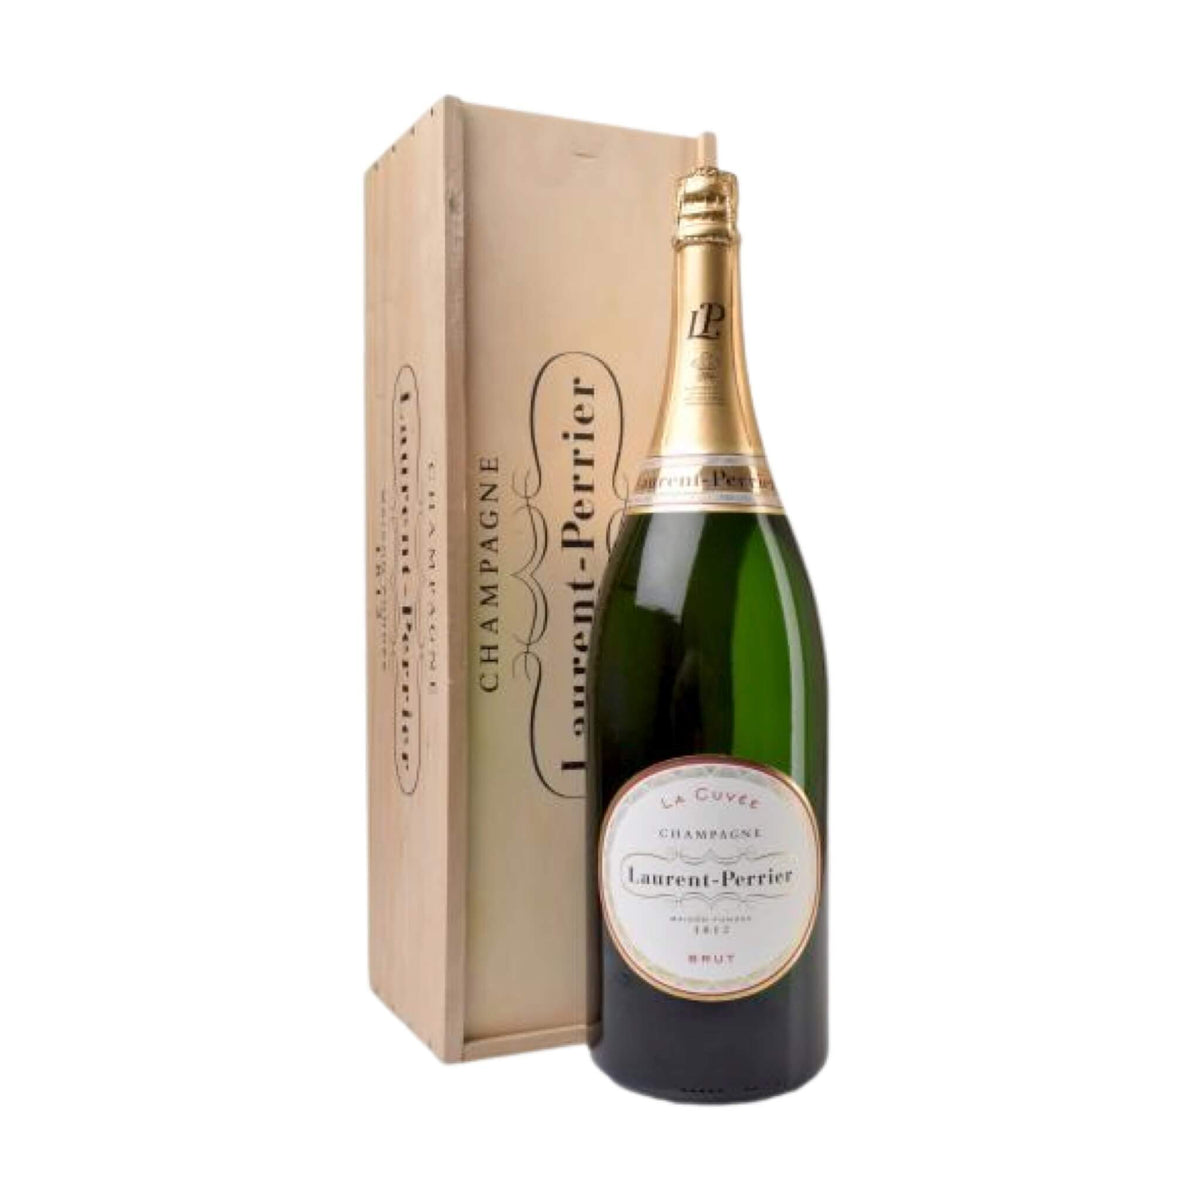 Champagne Laurent-Perrier - Brut Magnum Champagne AOC DMG (3,0l) | WINECOM